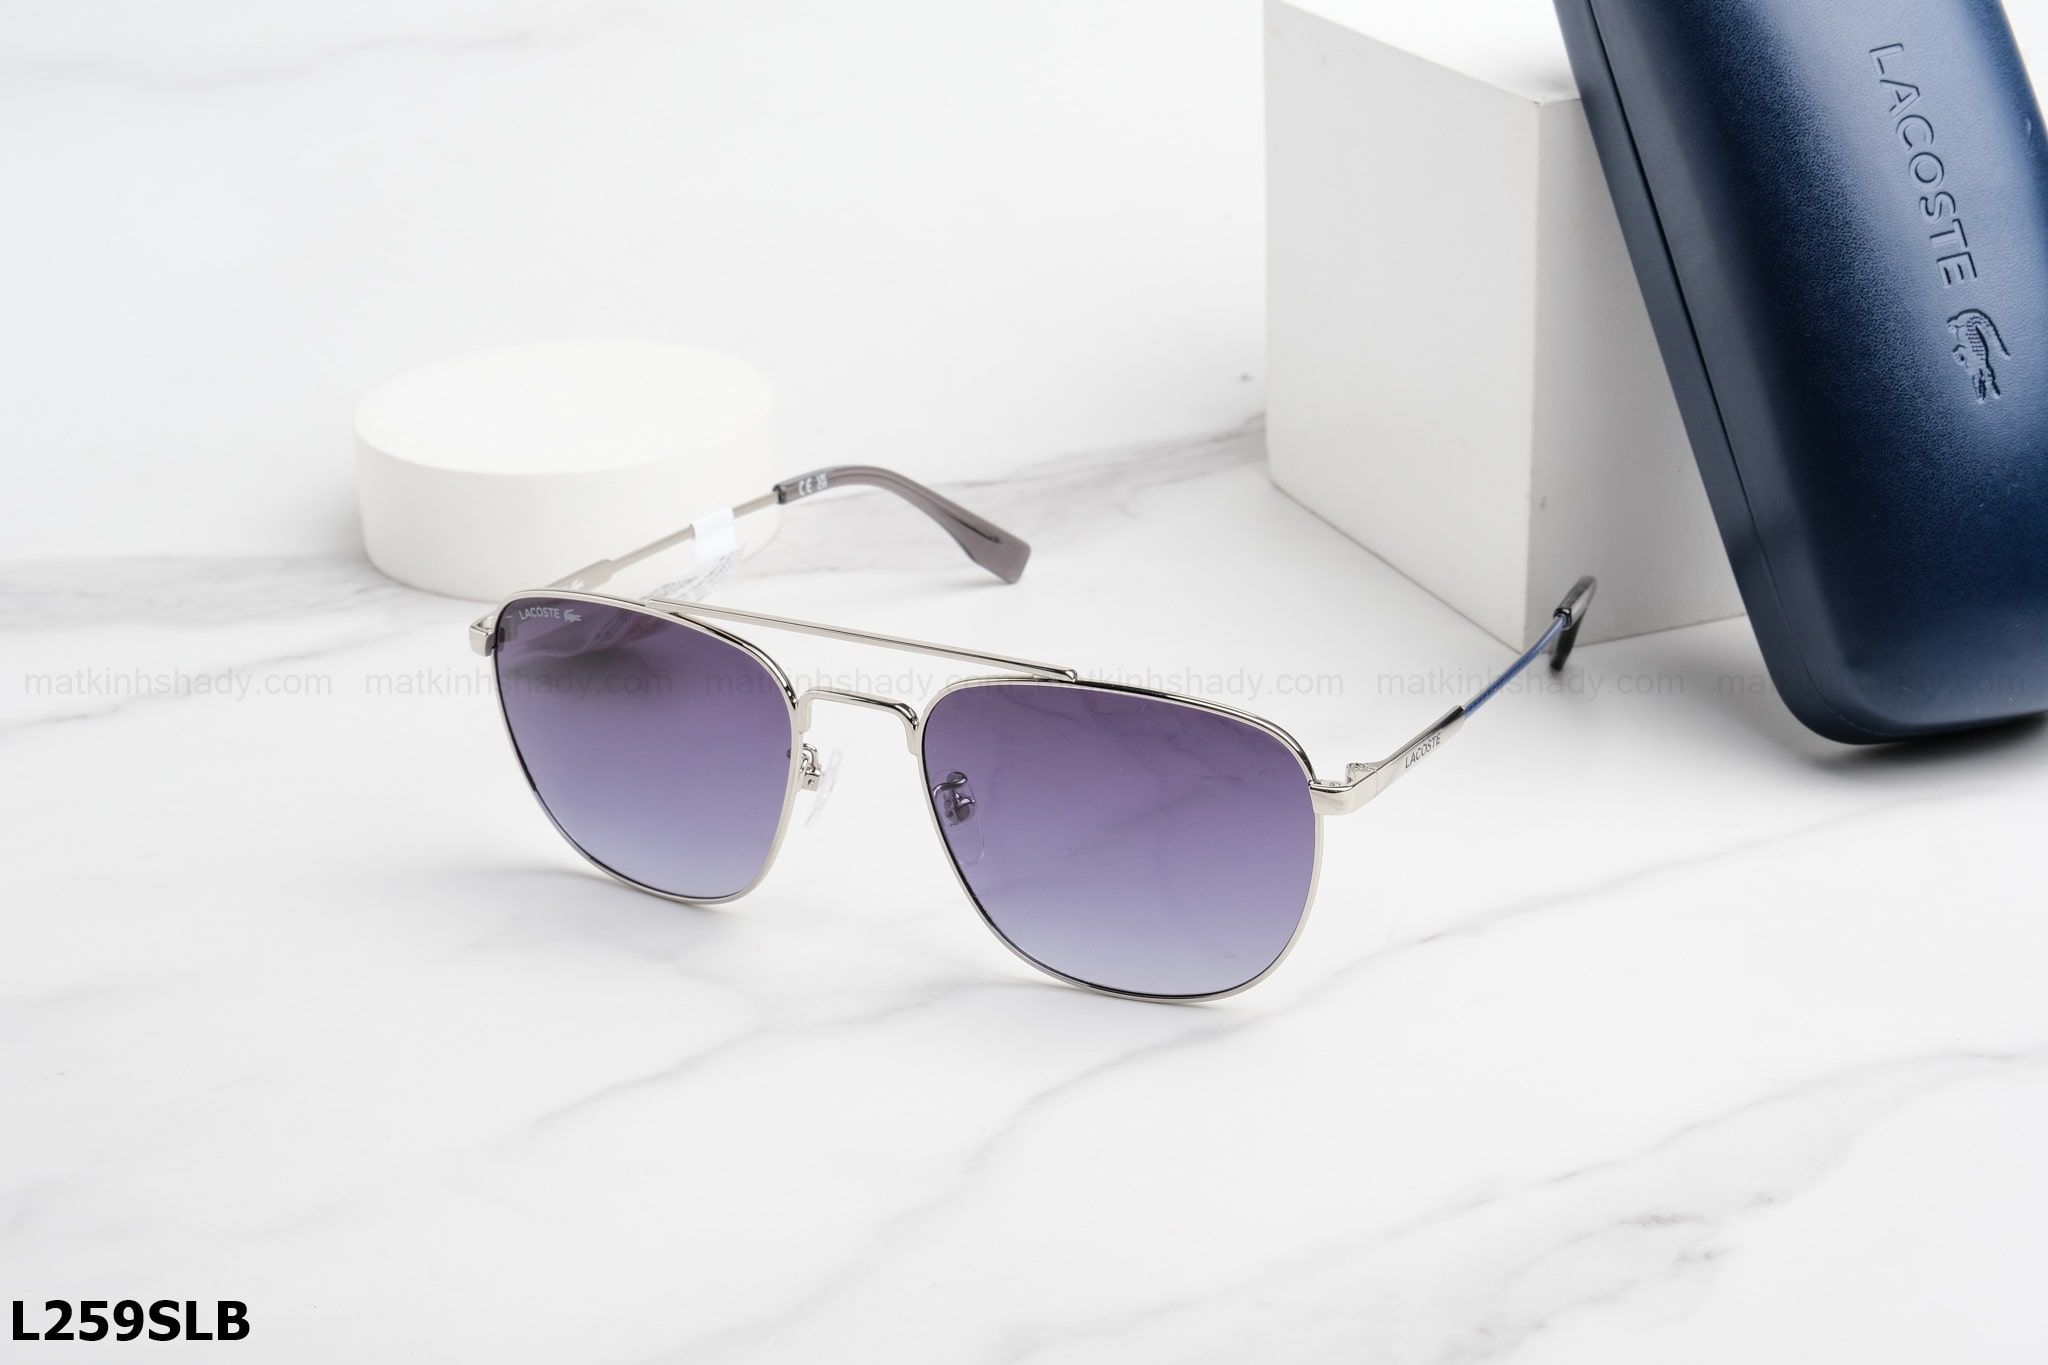  Lacoste Eyewear - Sunglasses - L259SLB 